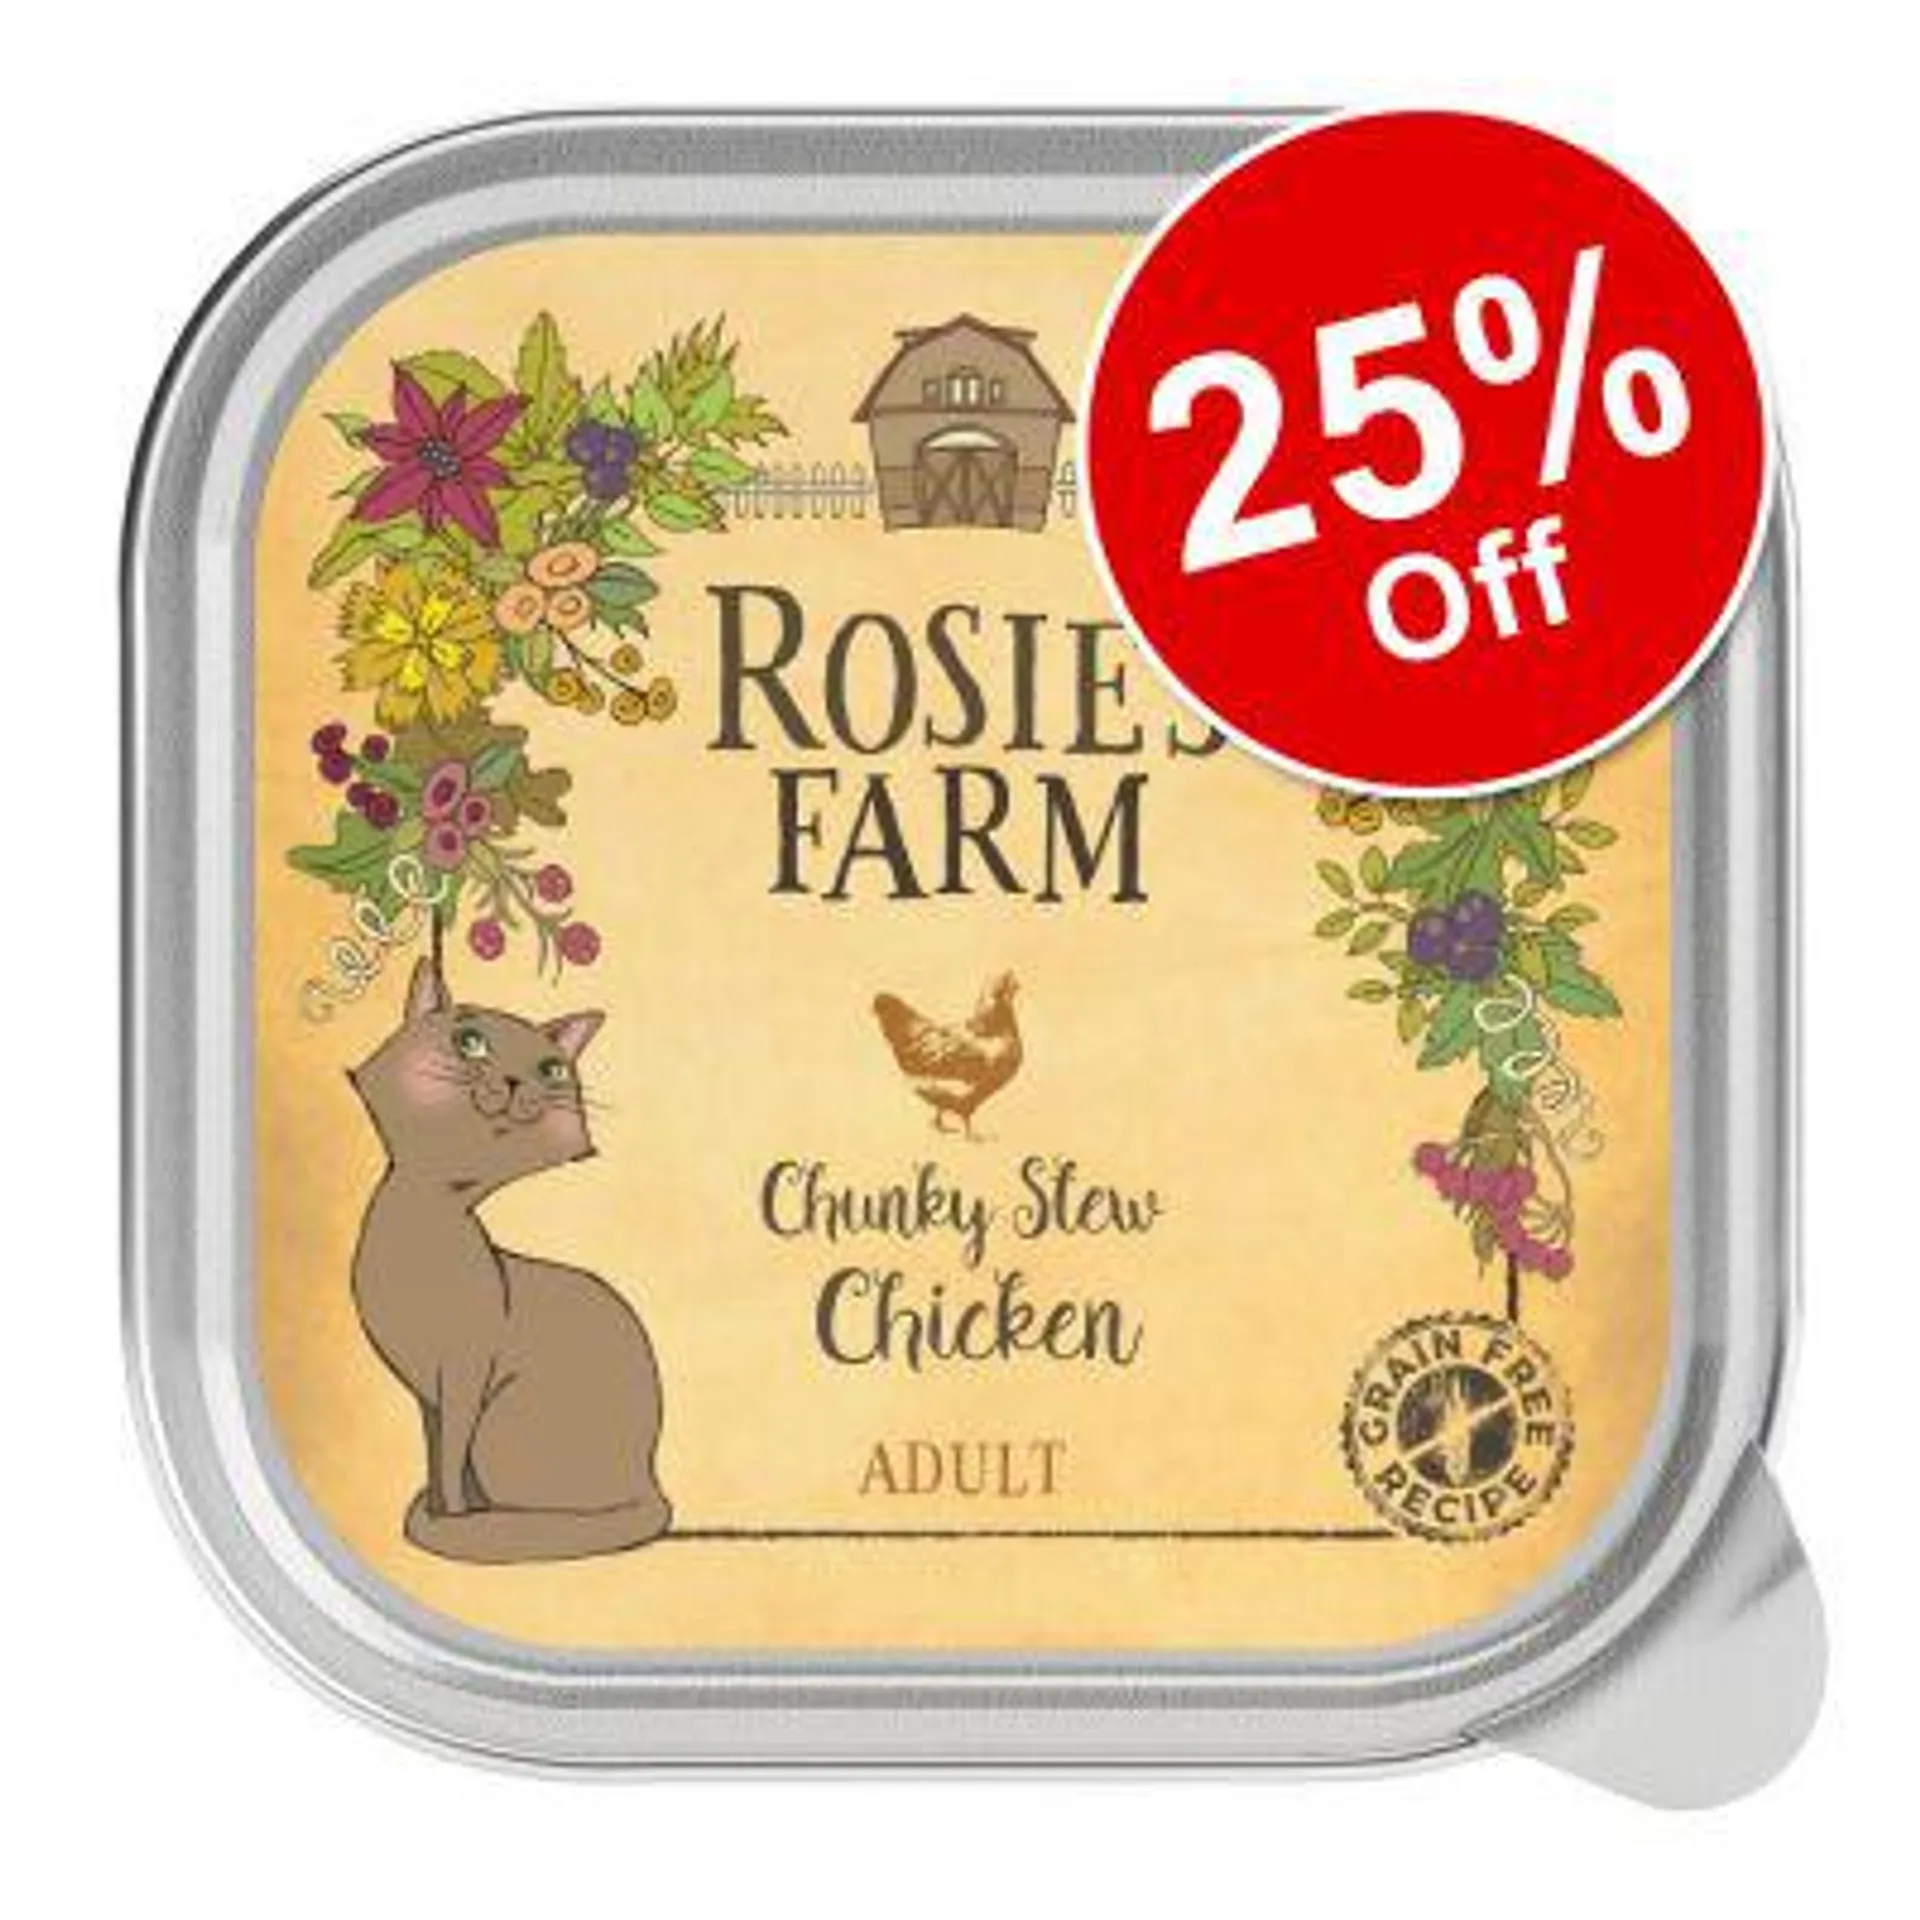 16 x 100g Rosie's Farm Wet Cat Food - 25% Off!*